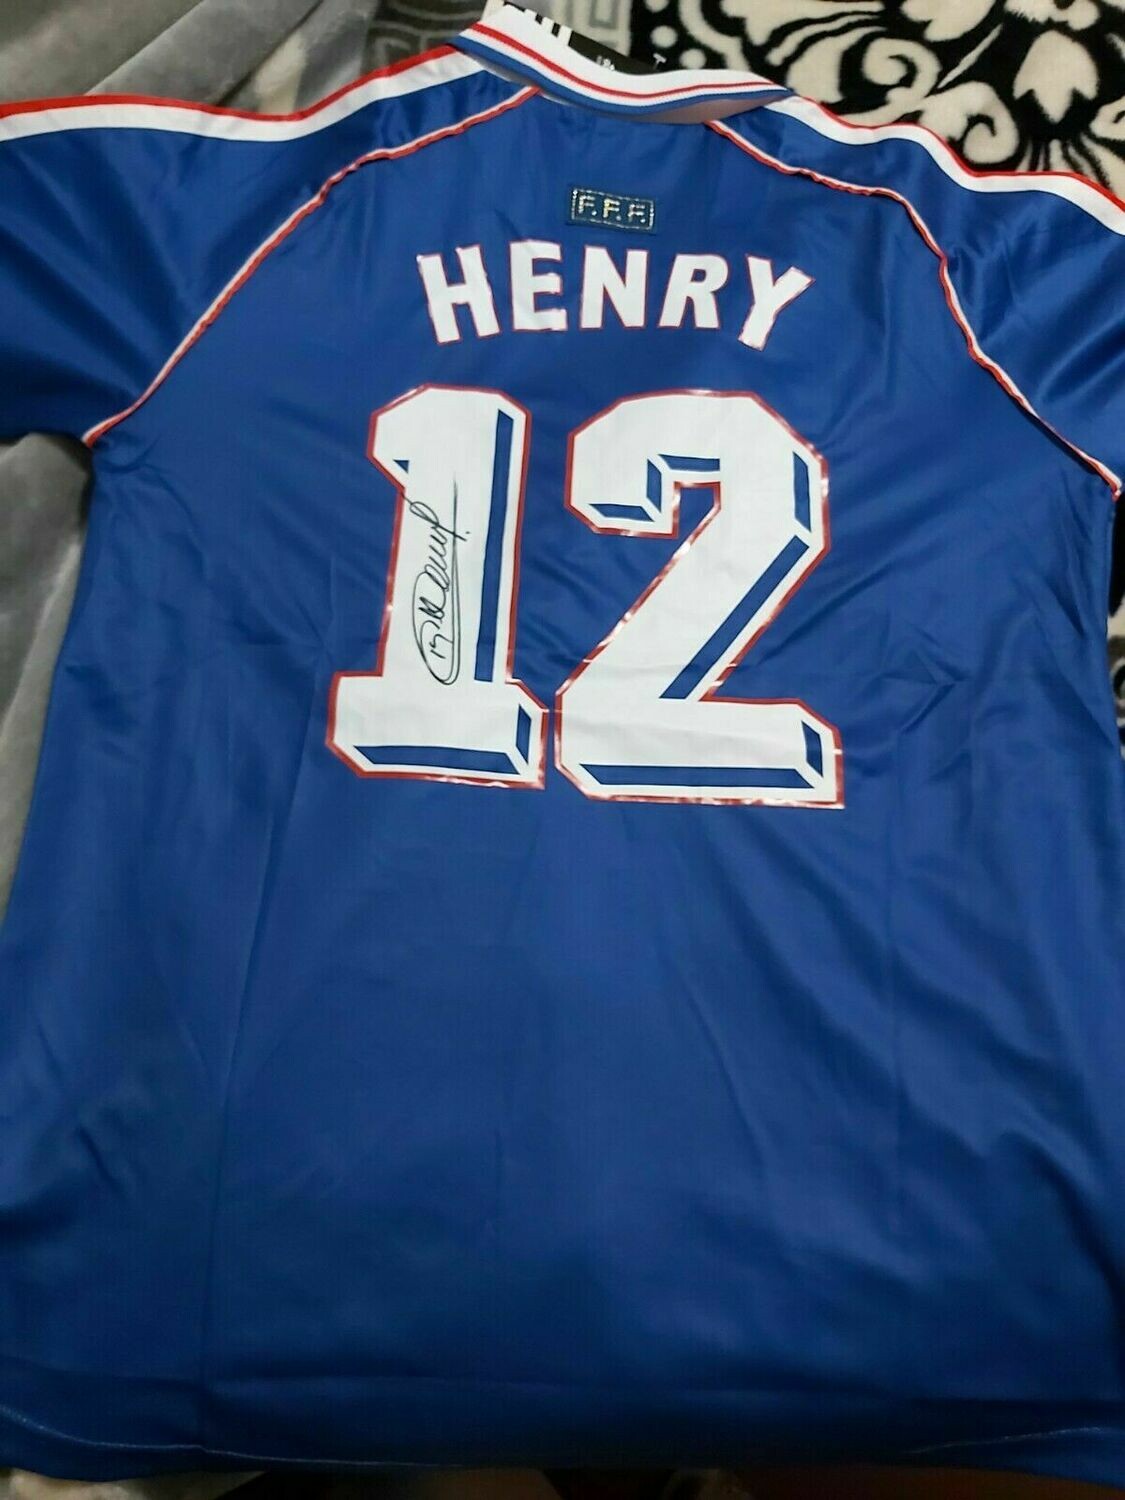 FRANCIA 1998 HENRY 12 Autografata da HENRY con certificato di autenticita' FRANCE JERSEY Signed From HENRY with certificate coa of authetincitiy